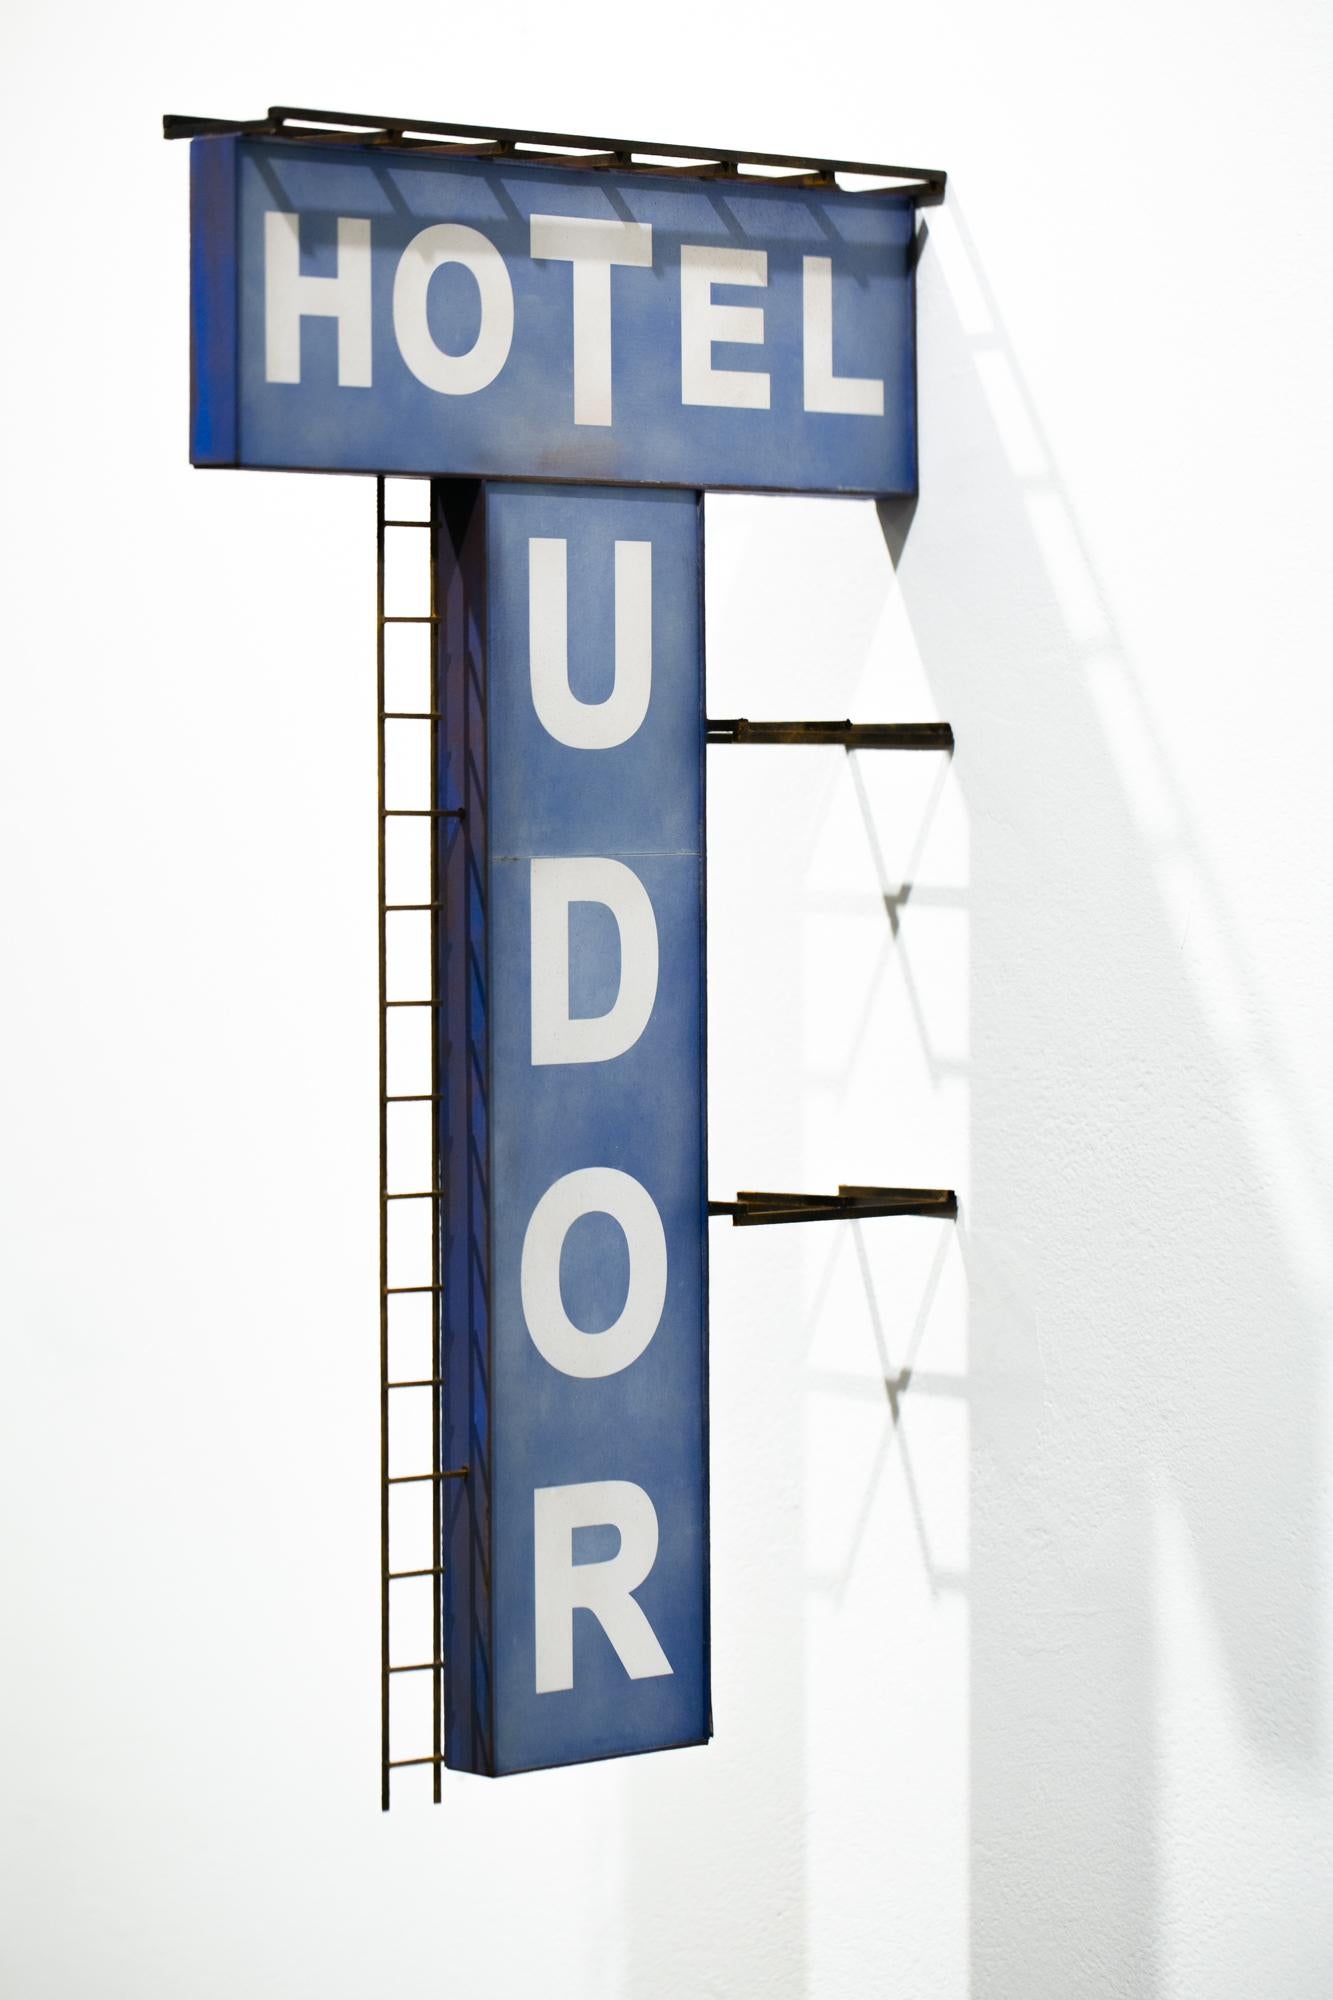 Drew Leshko Still-Life Sculpture - "Hotel Tudor", Miniature, Architecture, Sign, Cityscape, Sculpture, Blue, White